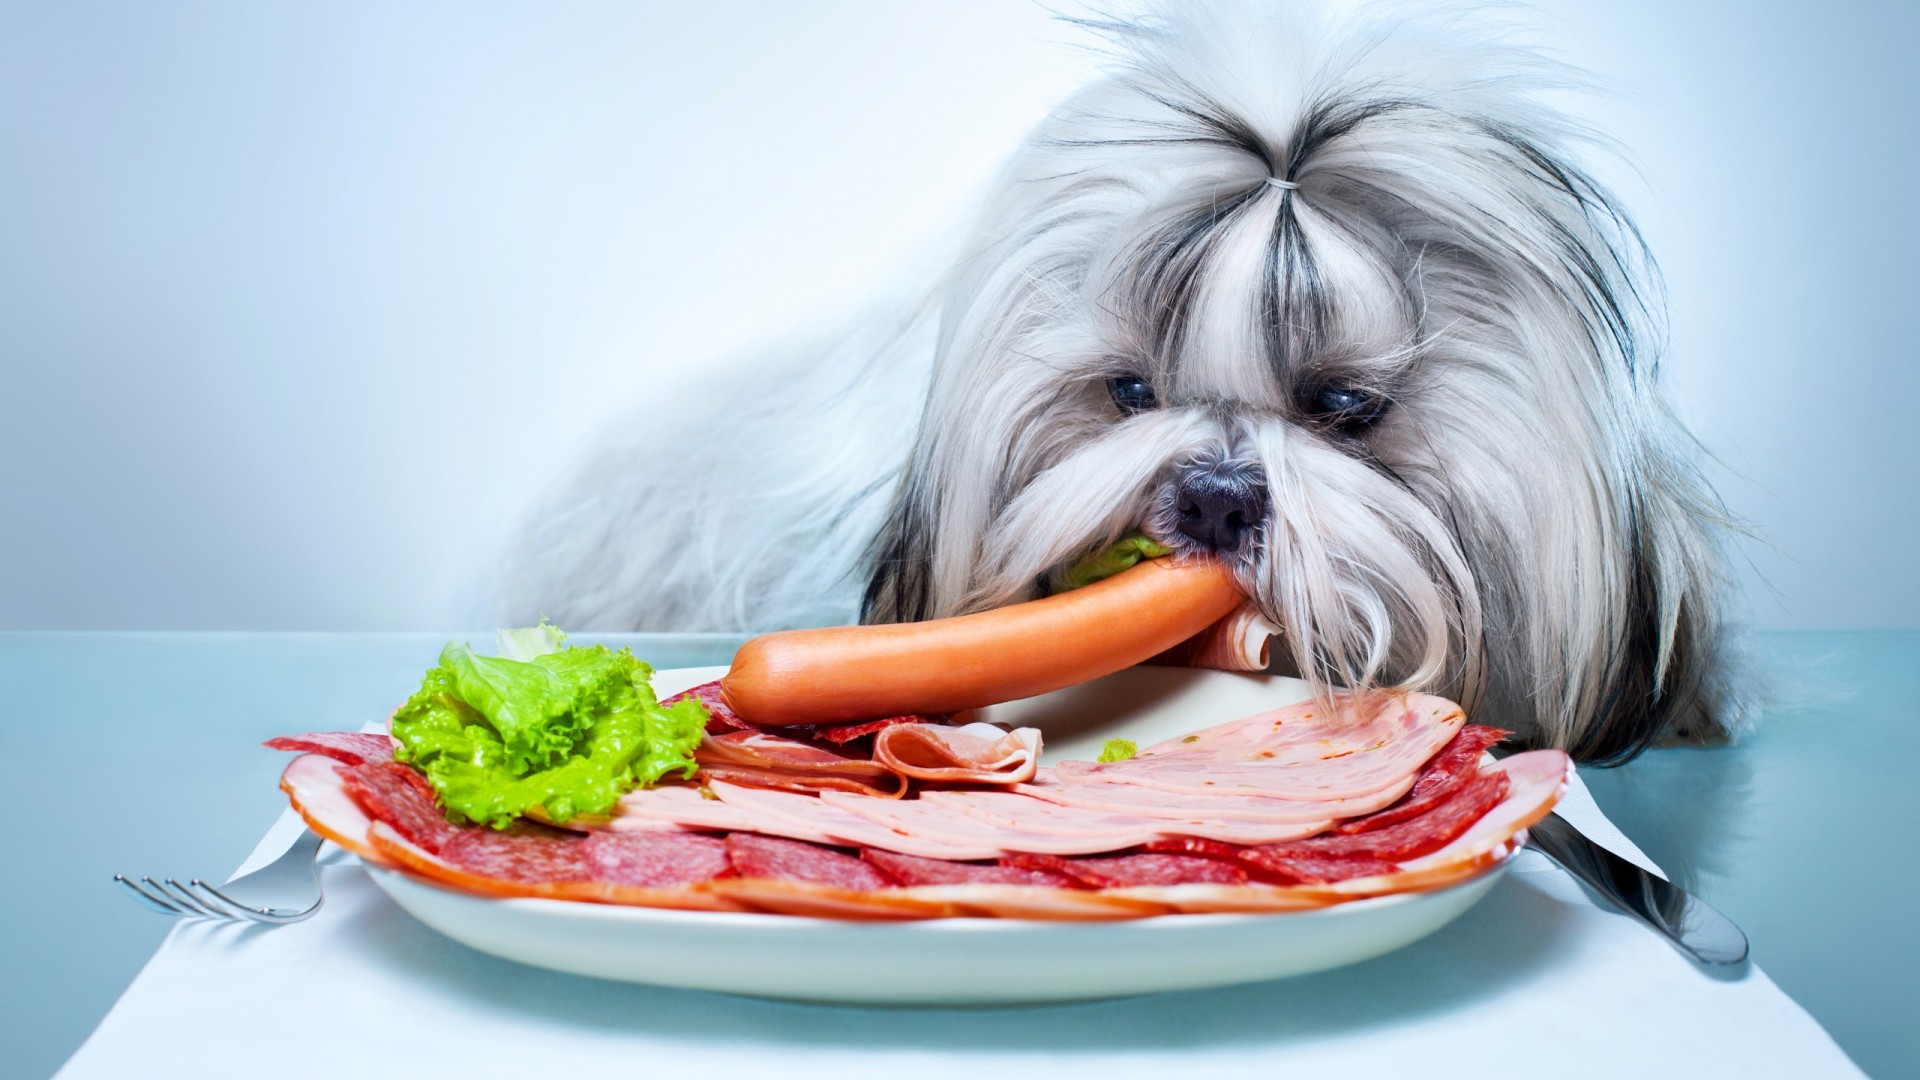 animals, Dog, Pet, Food, Meat, Vegetables, Plates, Salami, Simple Background, Eating Wallpaper HD / Desktop and Mobile Background